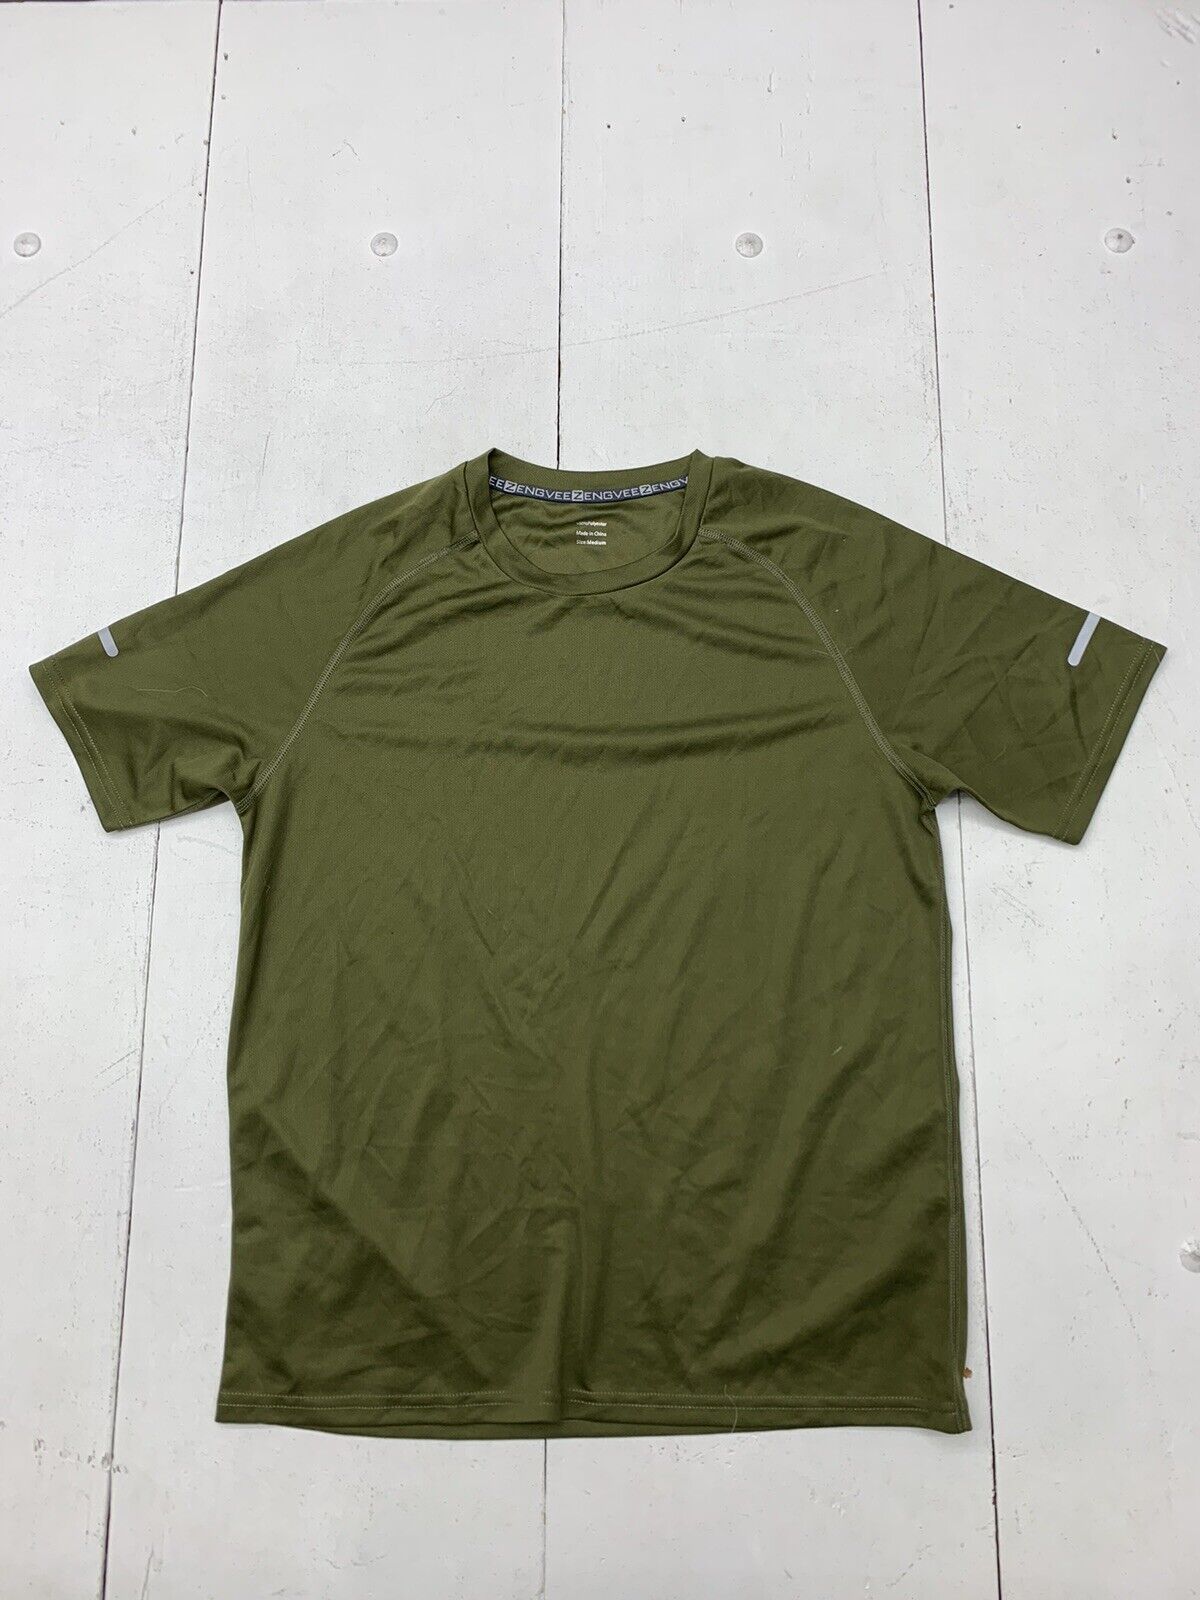 Zengvee Mens Green Athletic Short Sleeve Shirt Size Medium